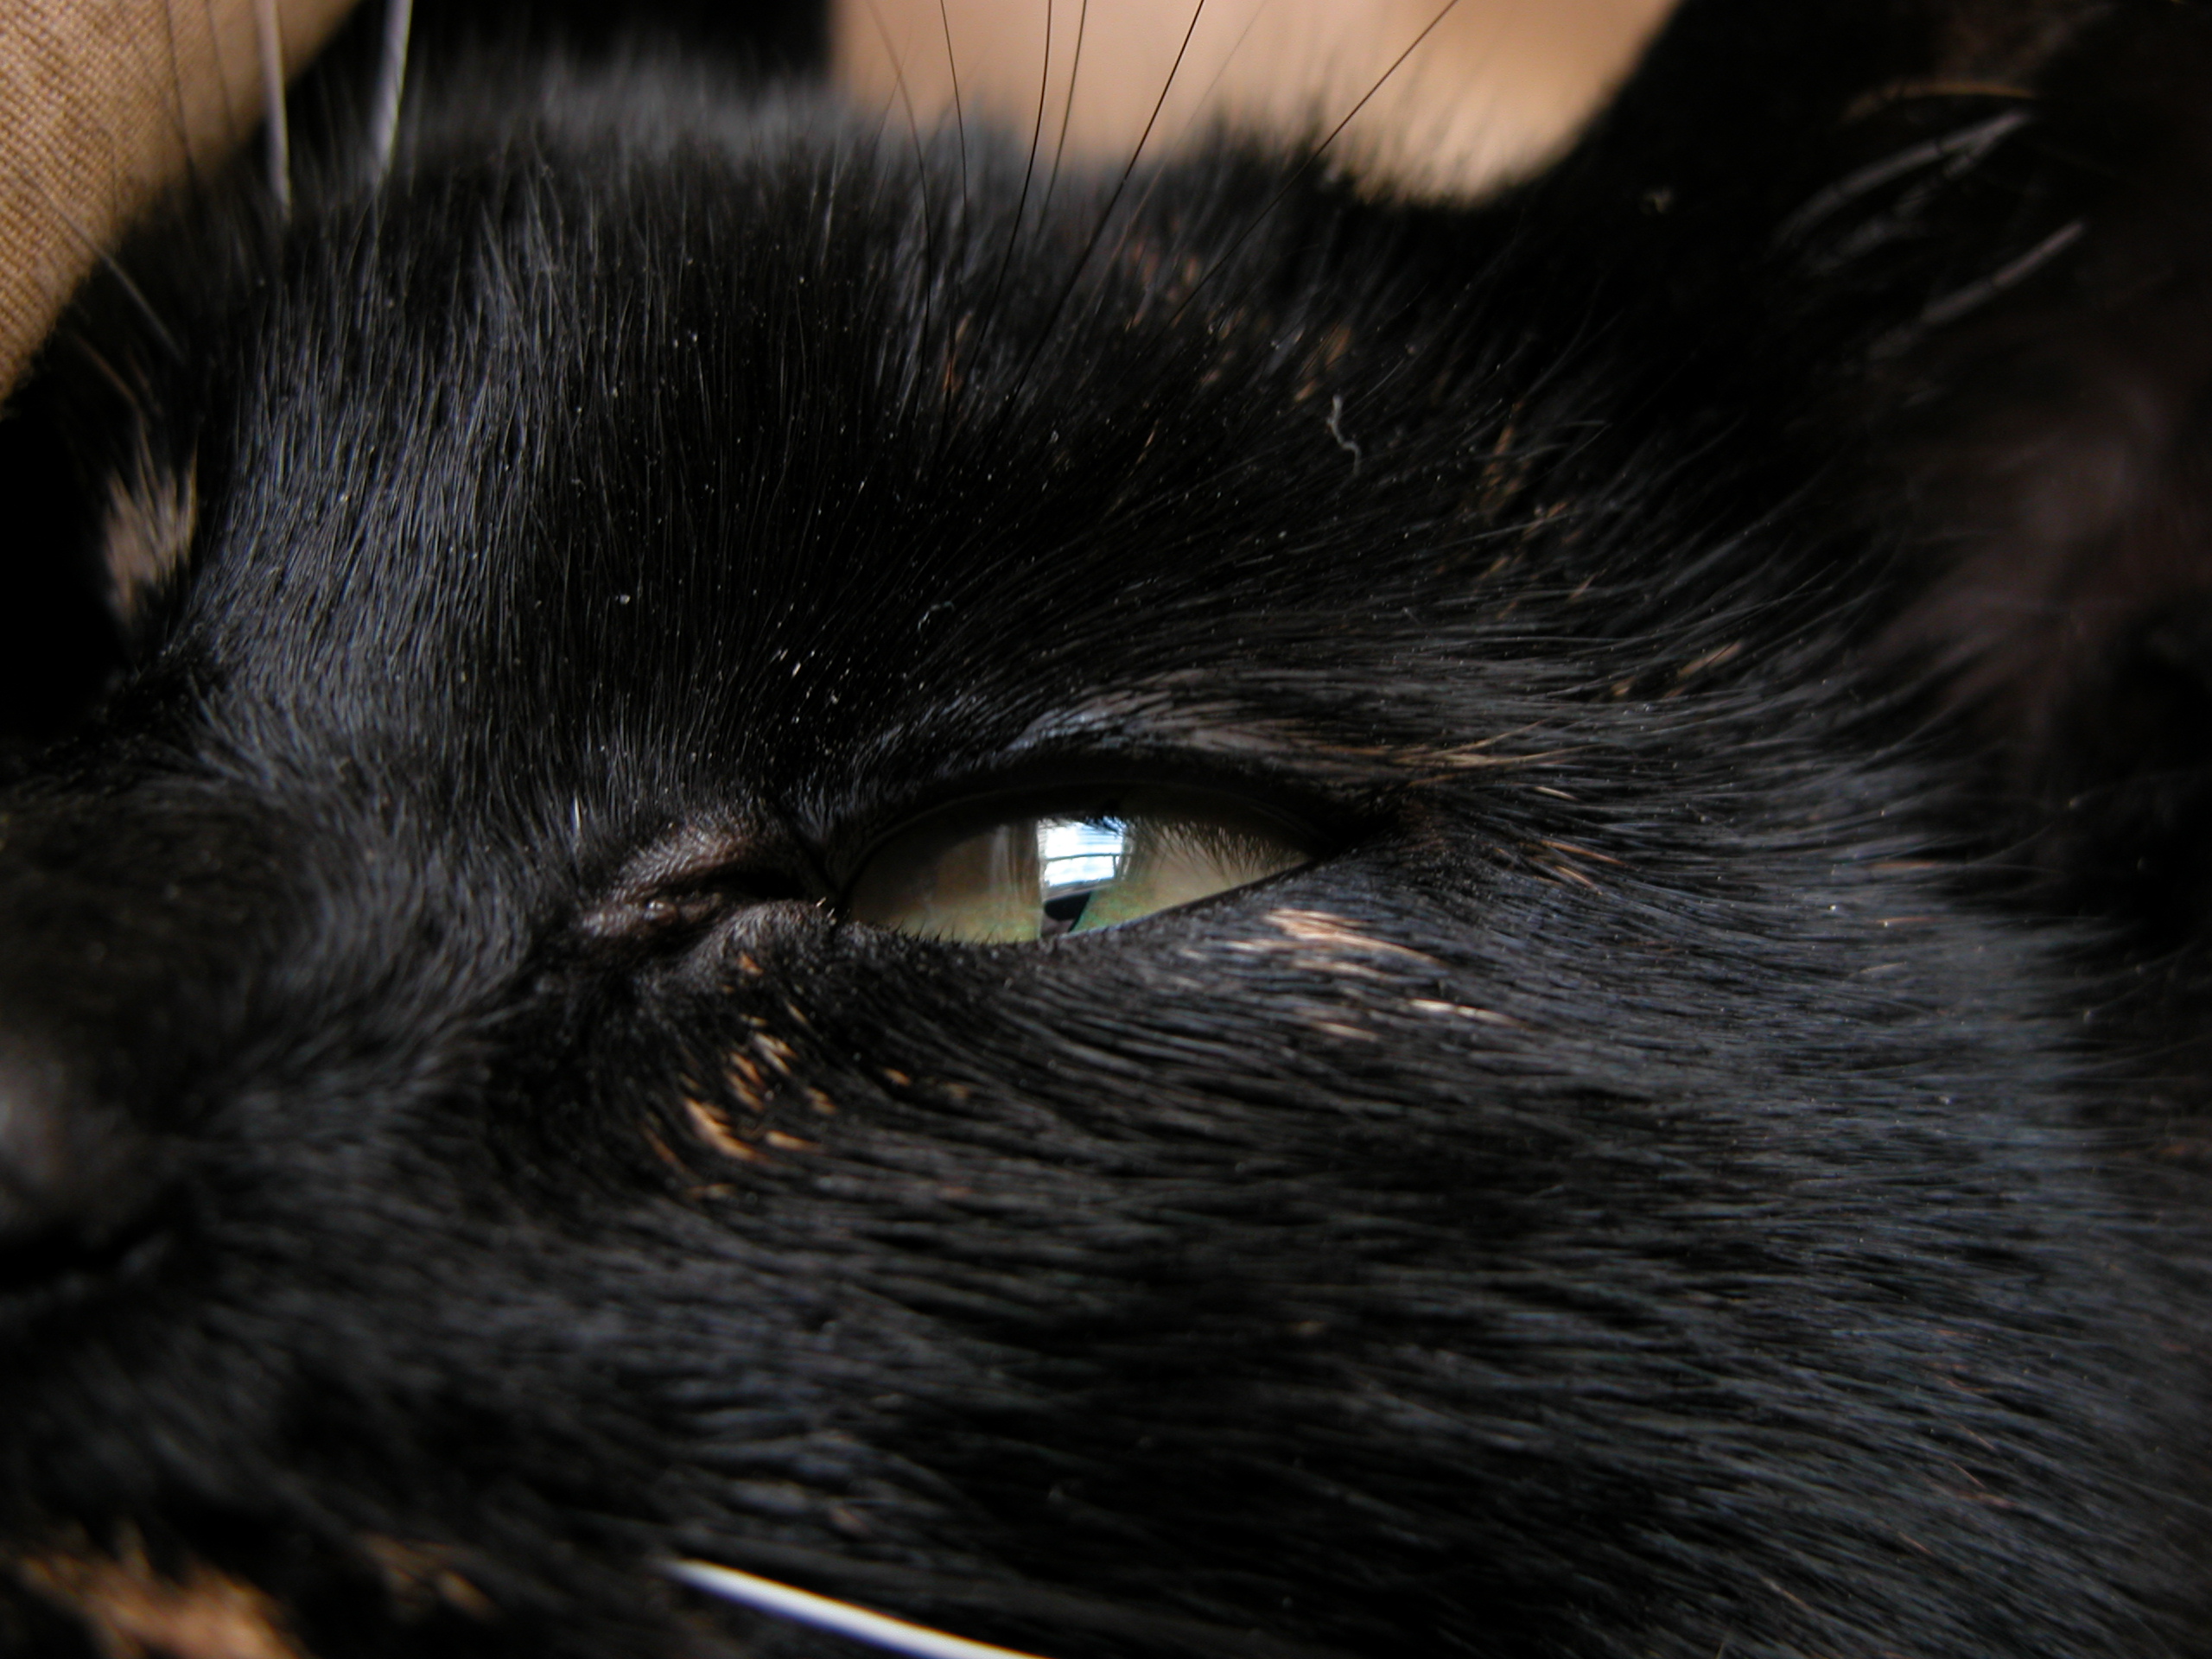 cat black and white cute head eye eyes closed green hair hairs fur hires